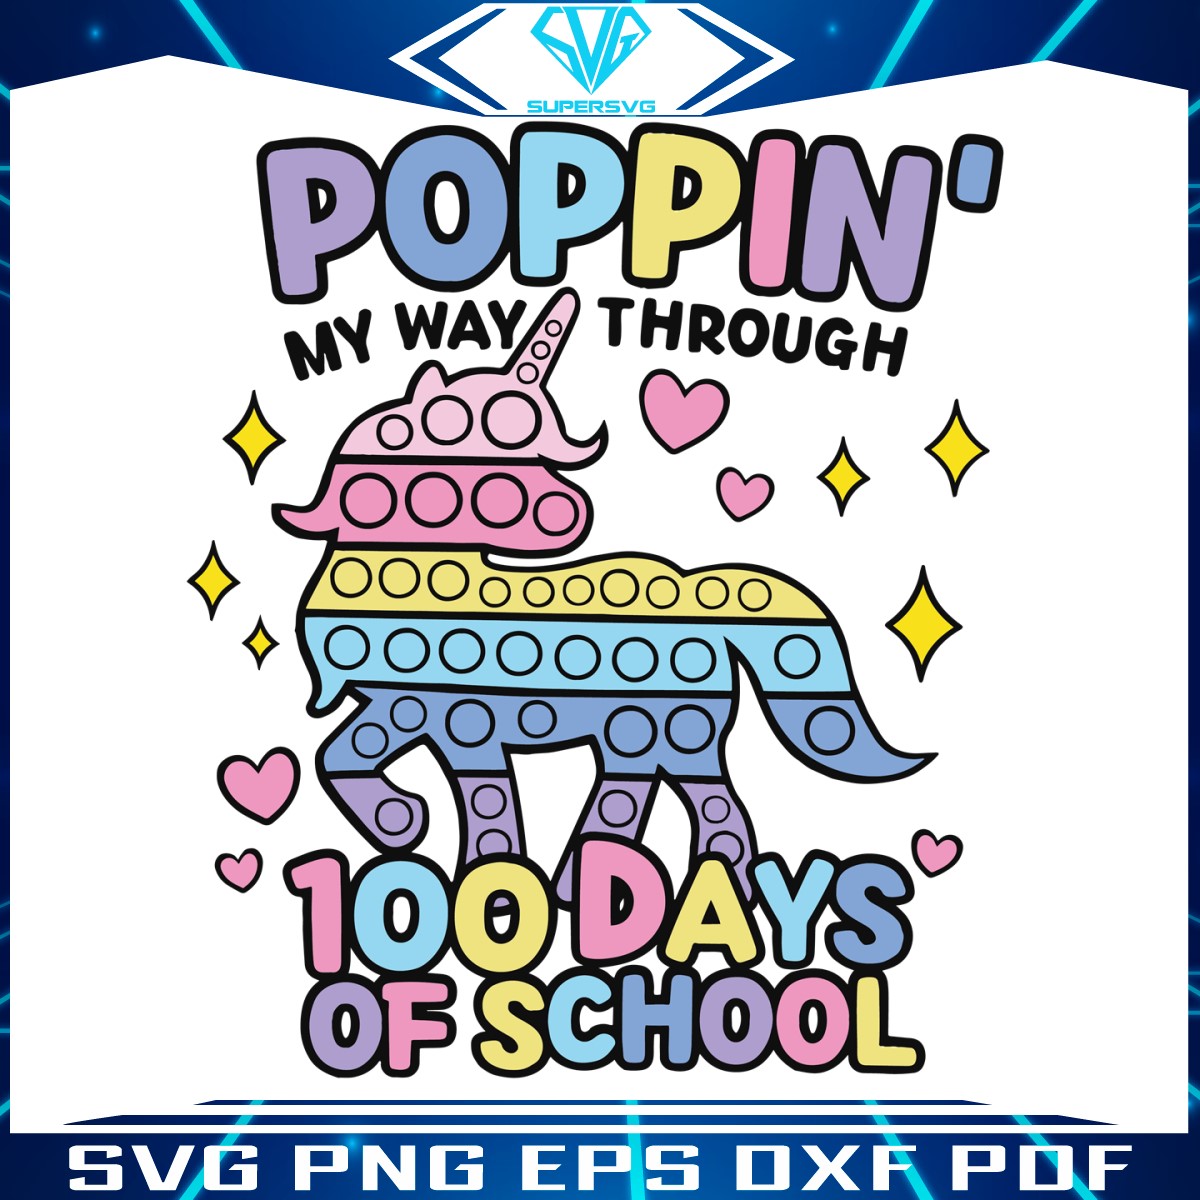 poppin-my-way-through-100-days-of-school-svg